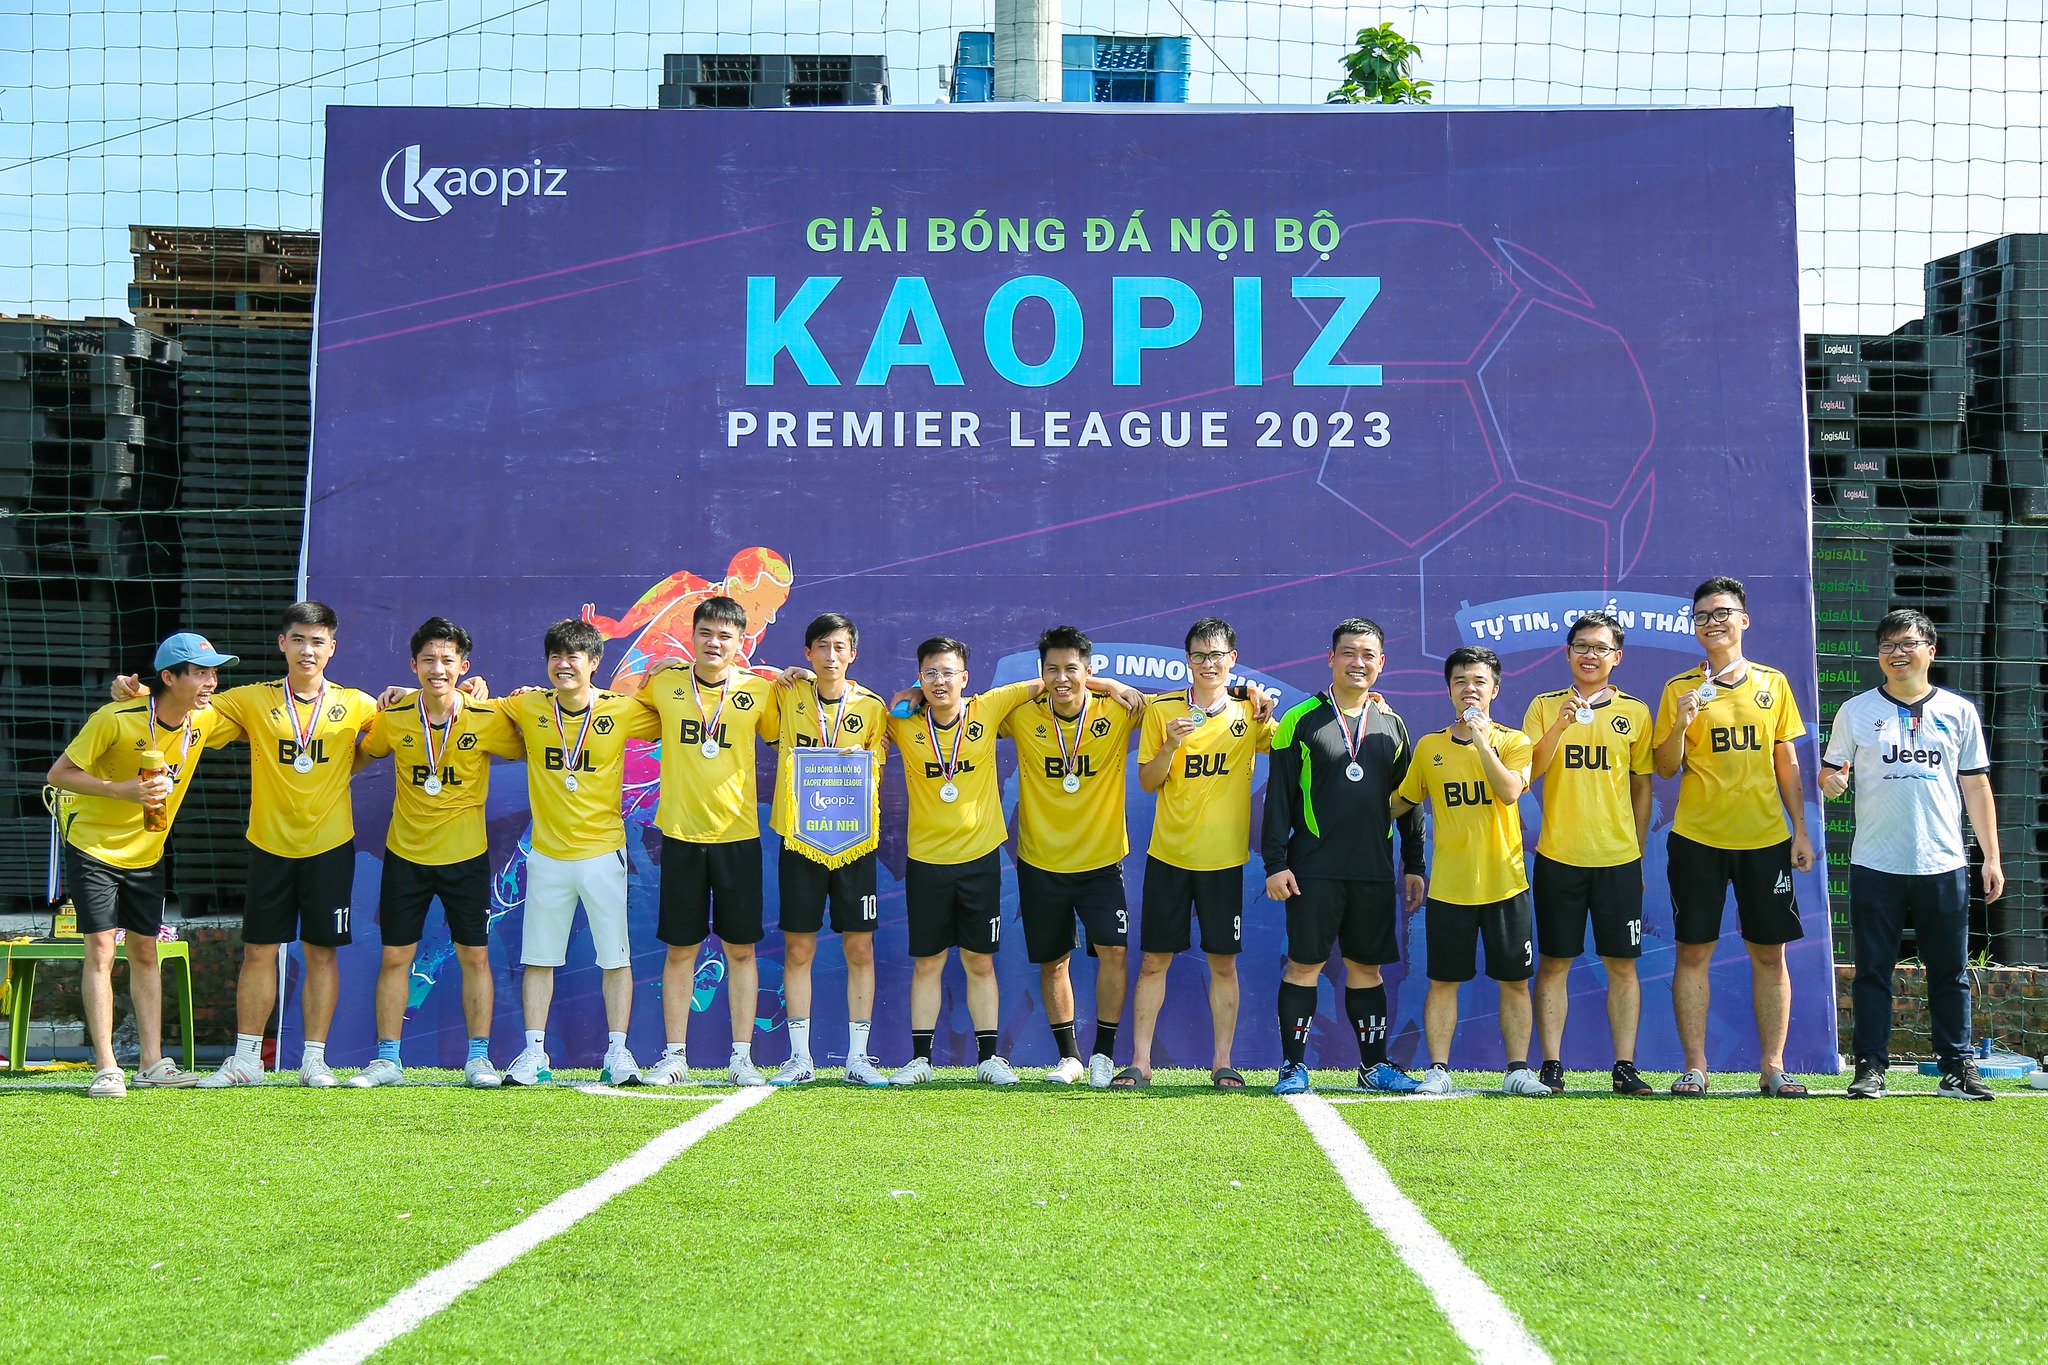 Kaopiz Premier League 2023